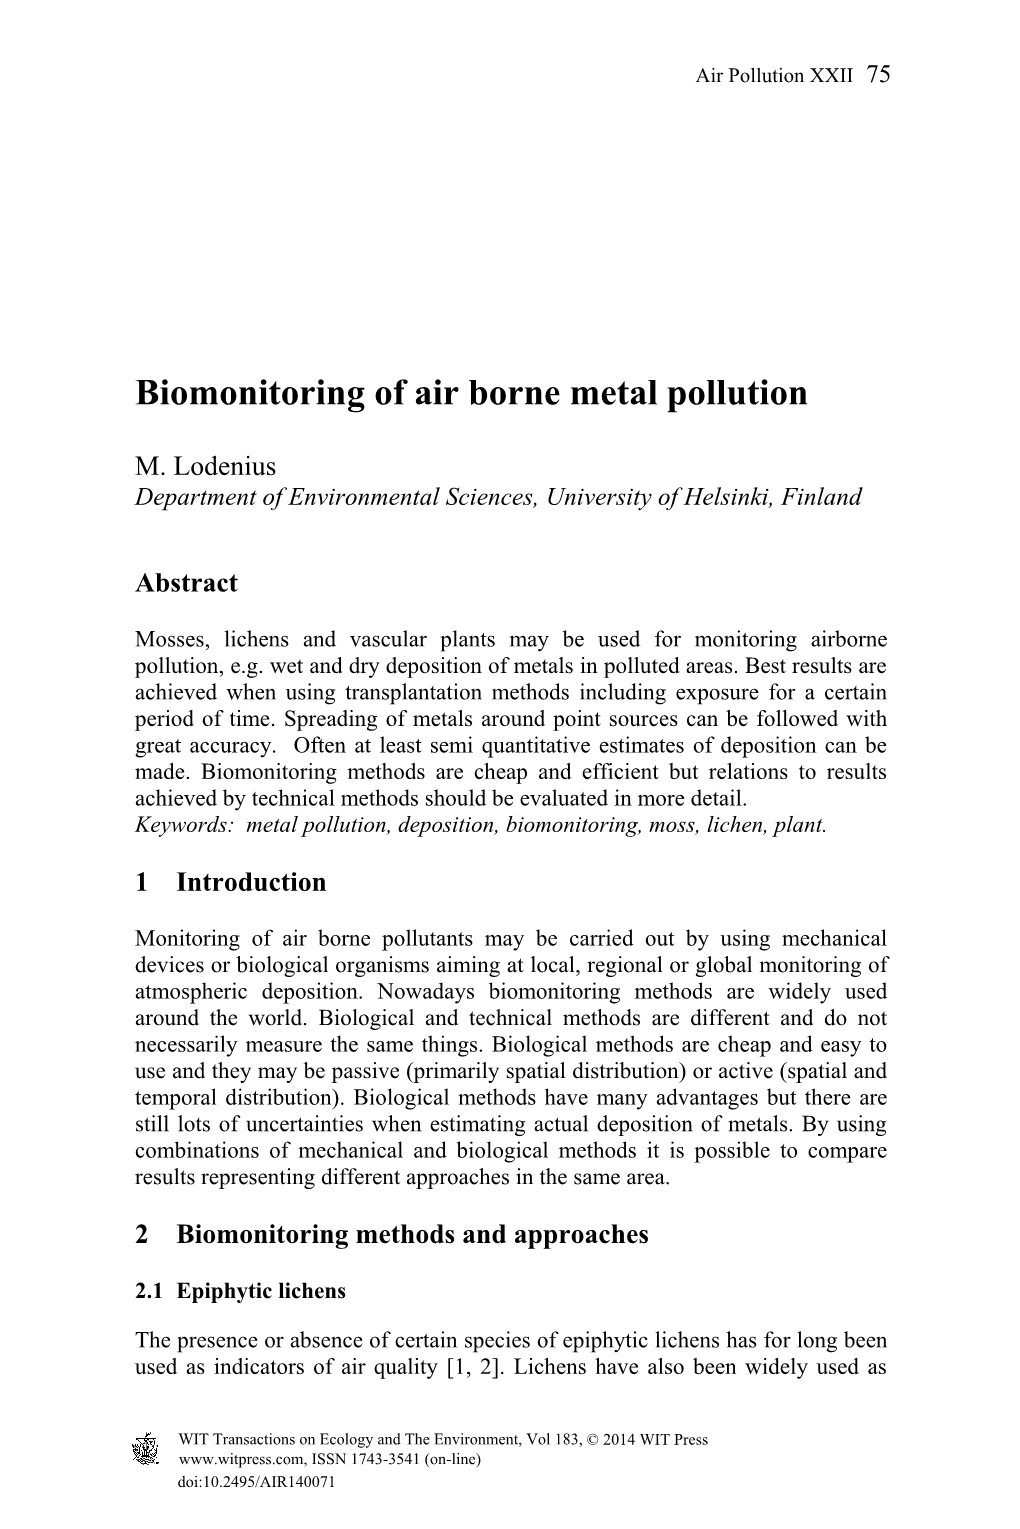 Biomonitoring of Air Borne Metal Pollution